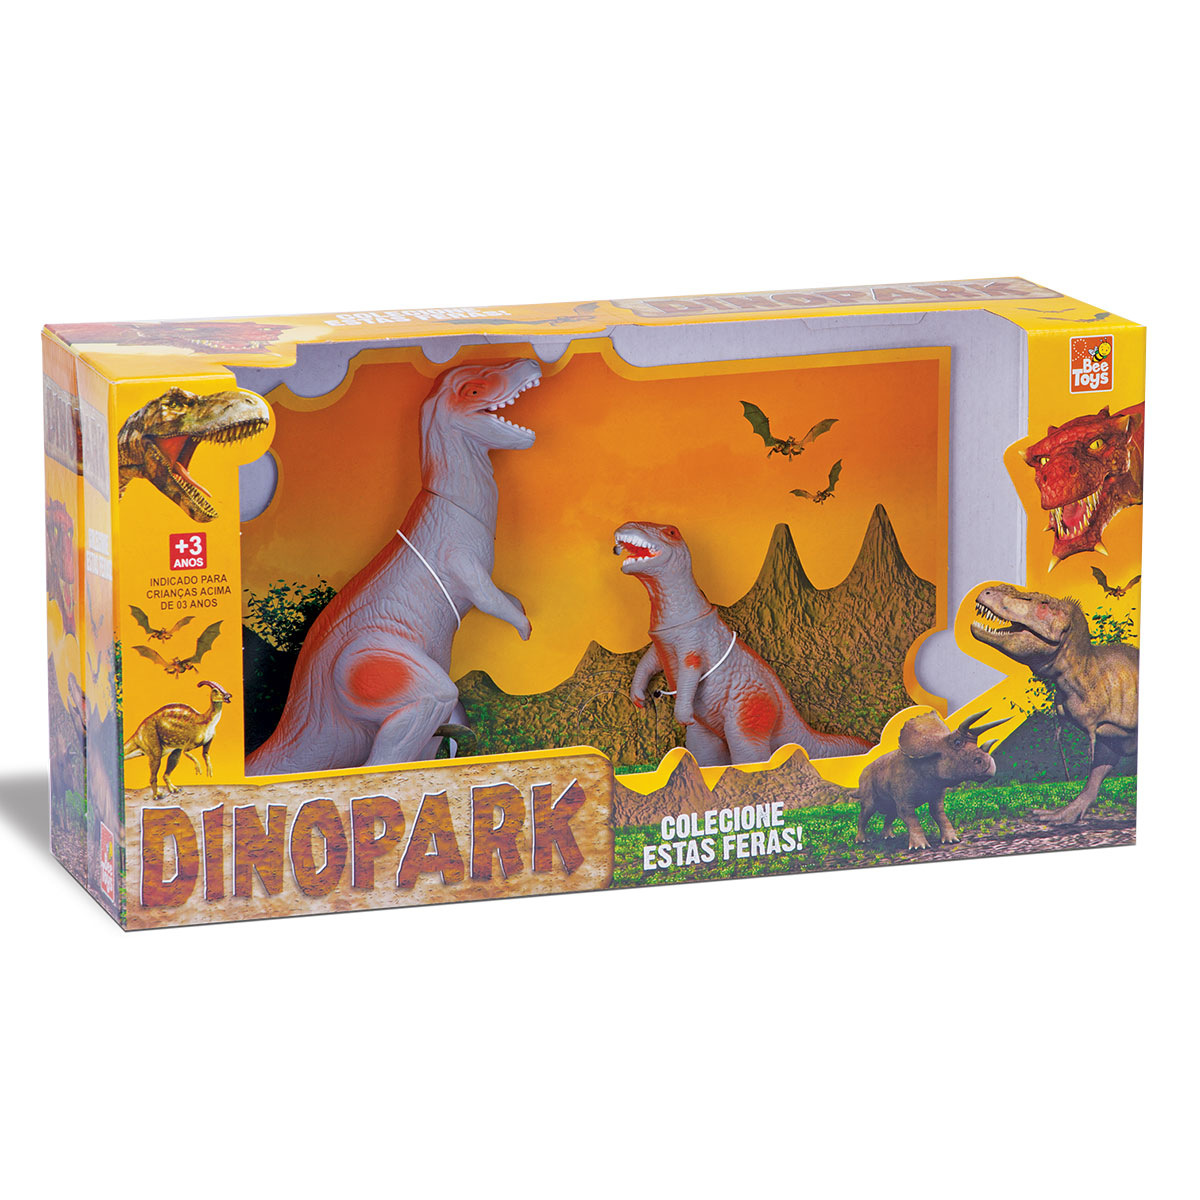 Dinossauro Dinopark Invencible Bee Toys EM OFERTA